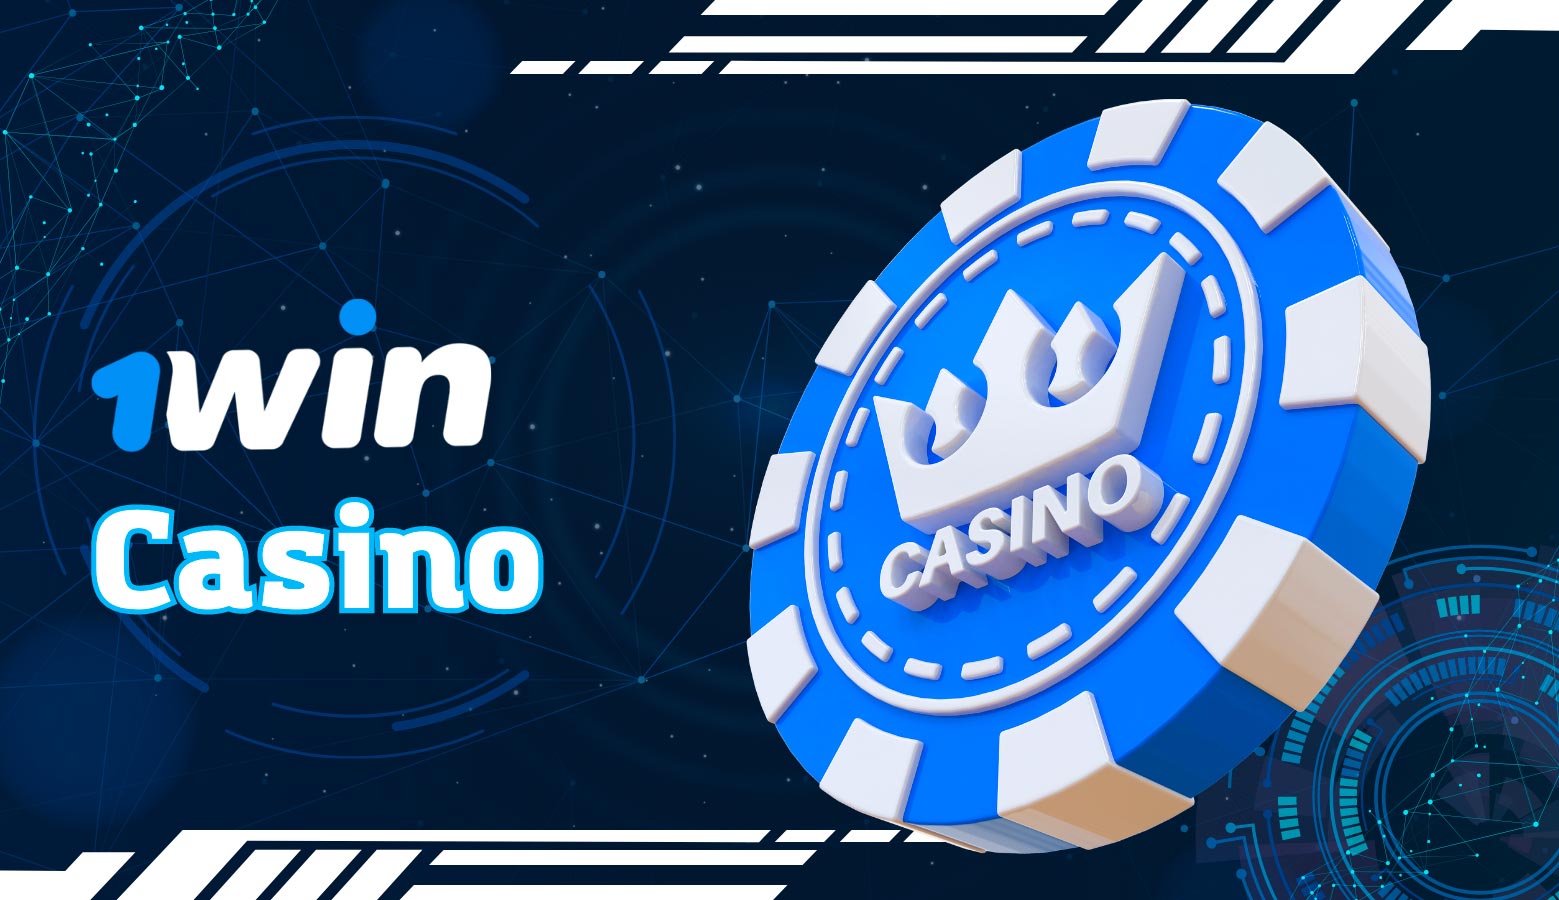 Catálogo de juegos de 1win Casino